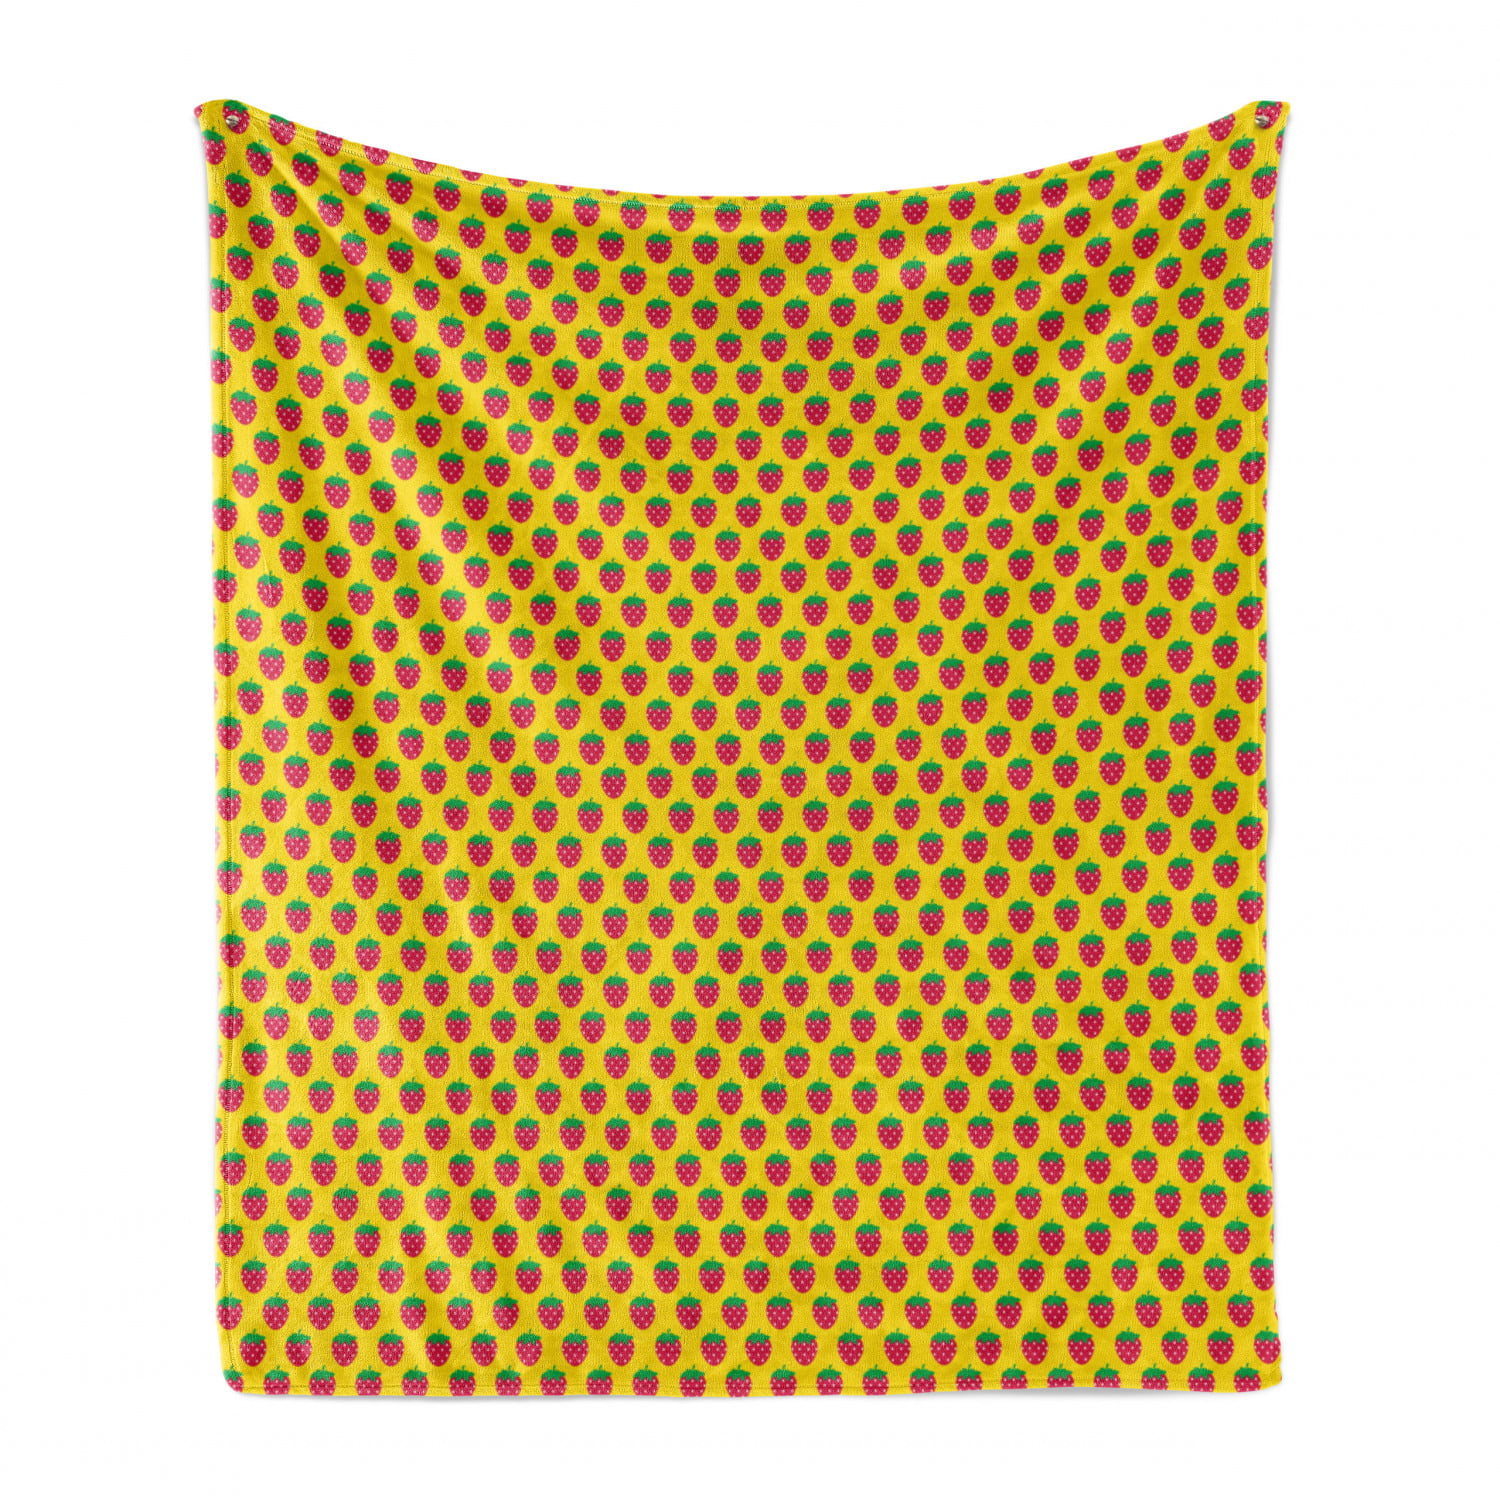 Fleece Throw Blanket Big Soft Lightweight for Couch Tropical Fruit,Dragon Fruit,Pineapple,Lemon,Pink 60x50 